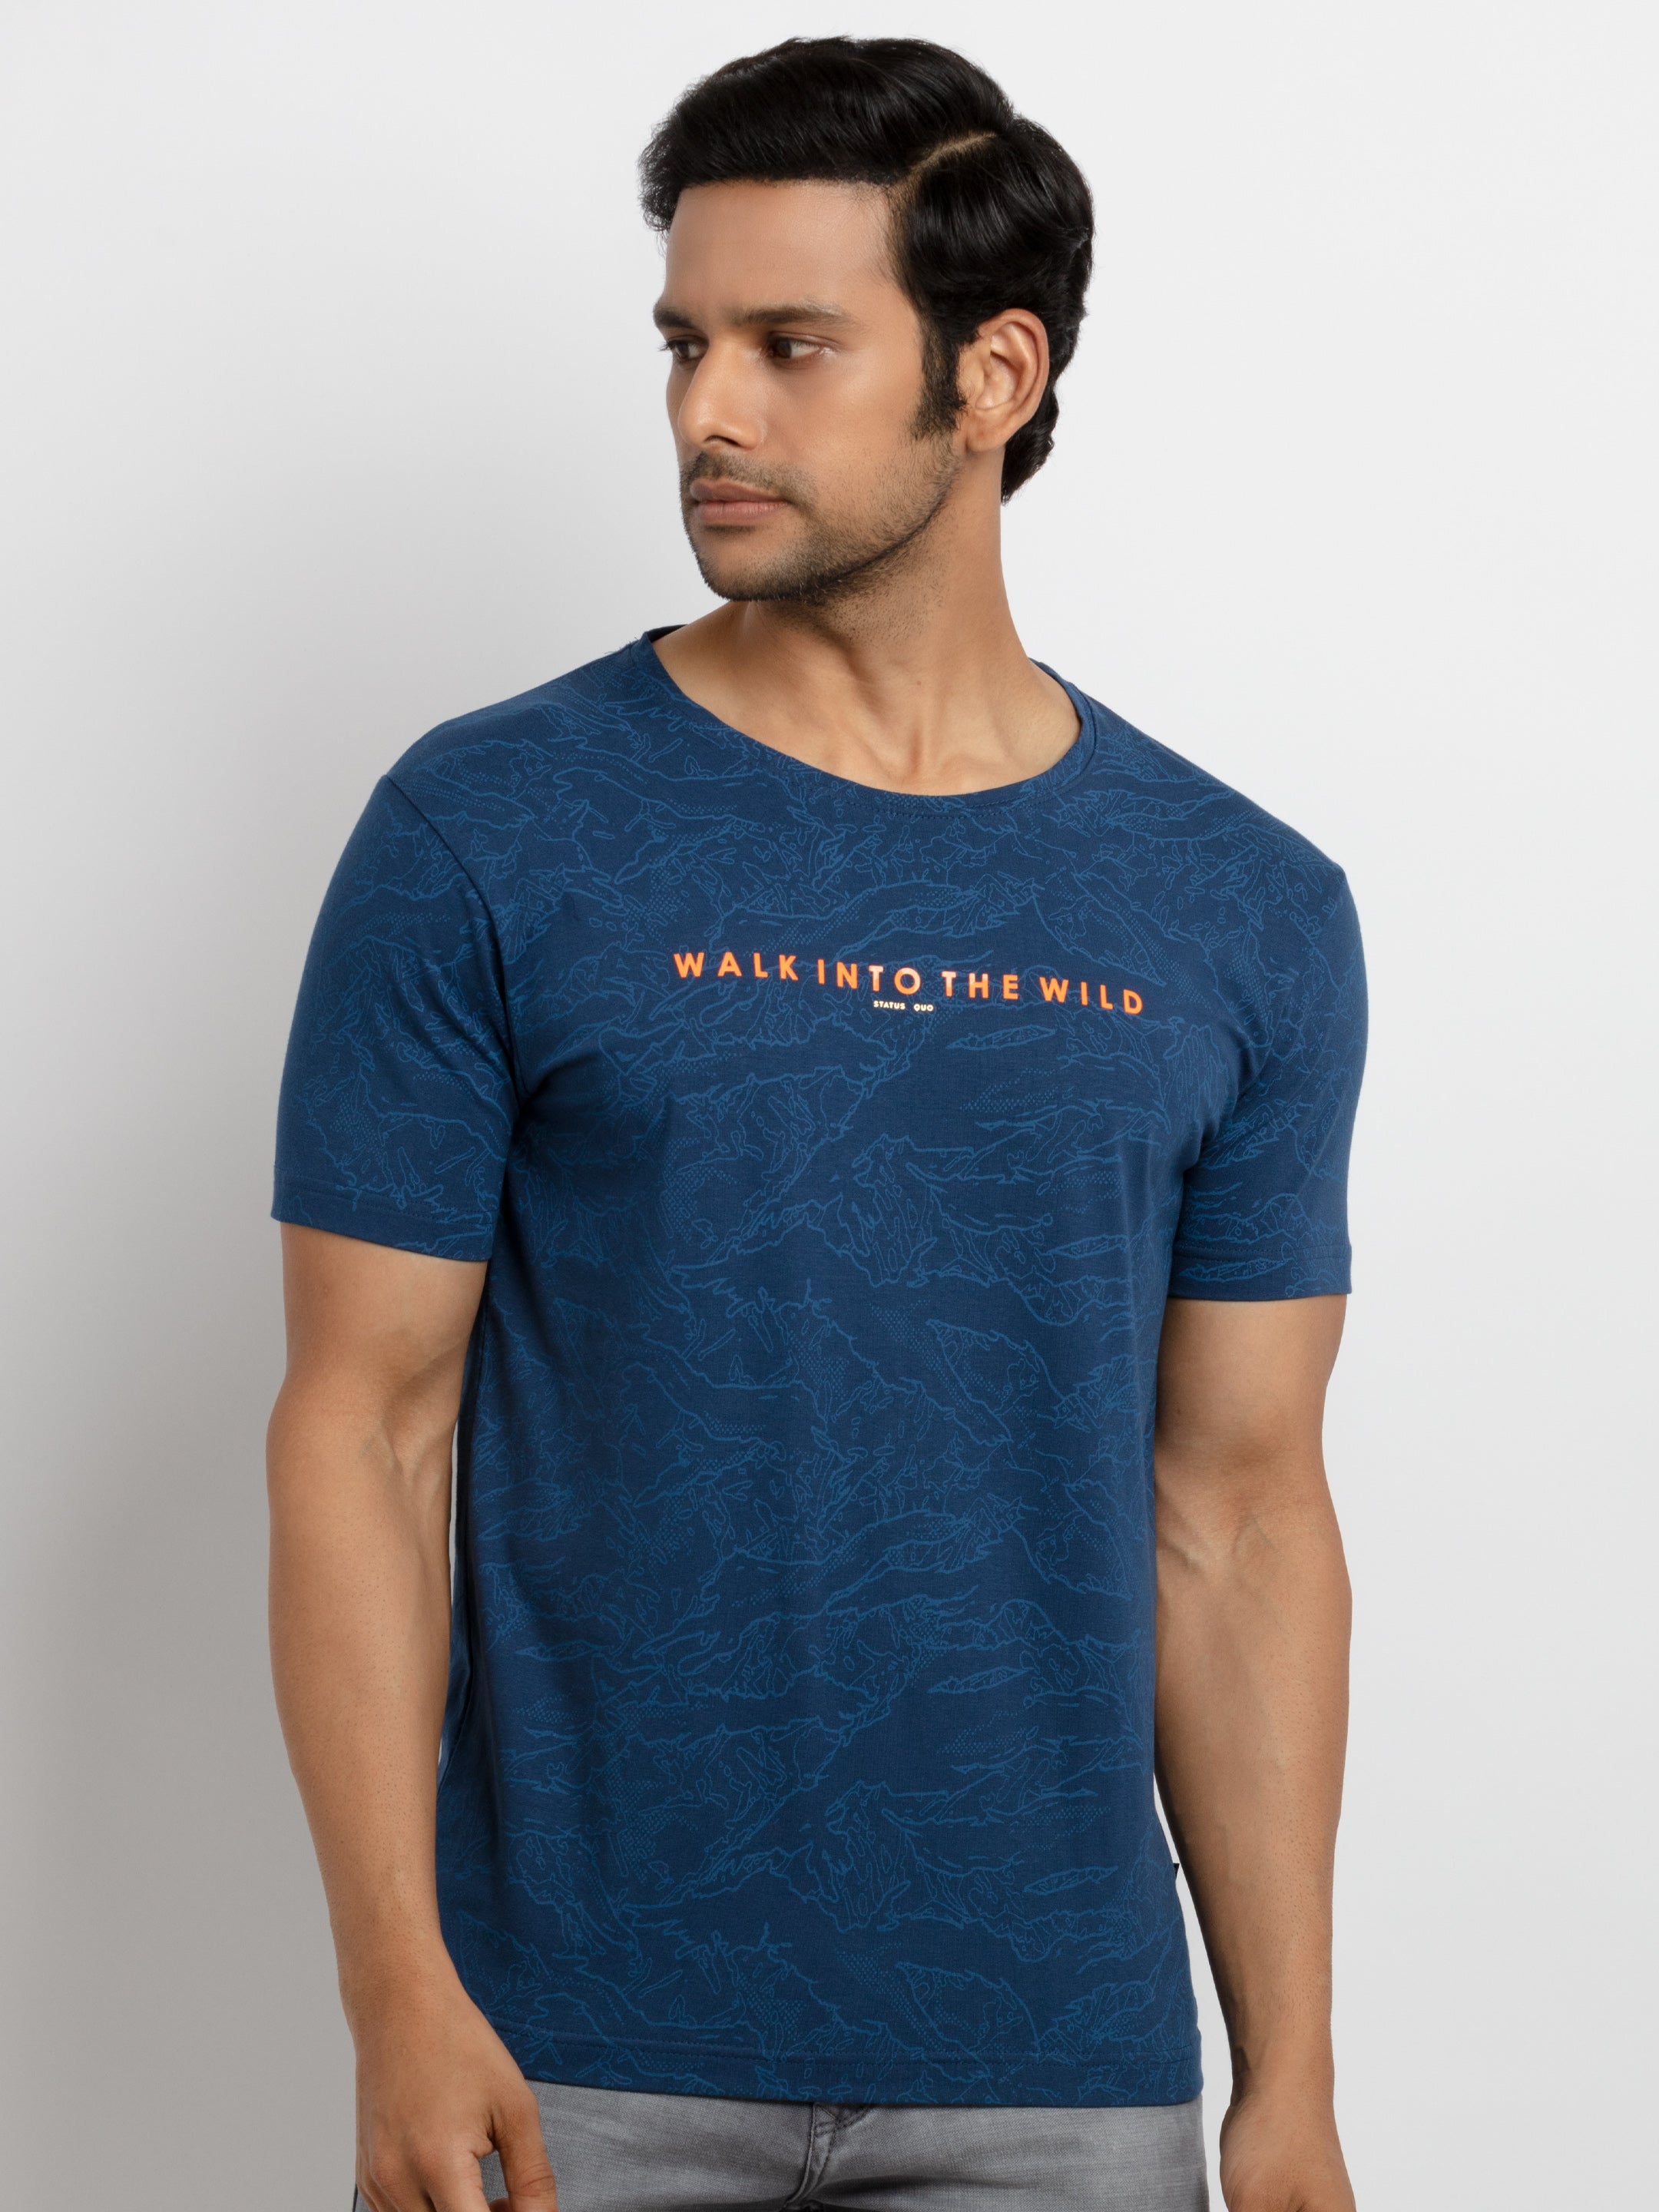 Status Quo |Men's Printed Polo T-shirt - S, M, L, XL, XXL